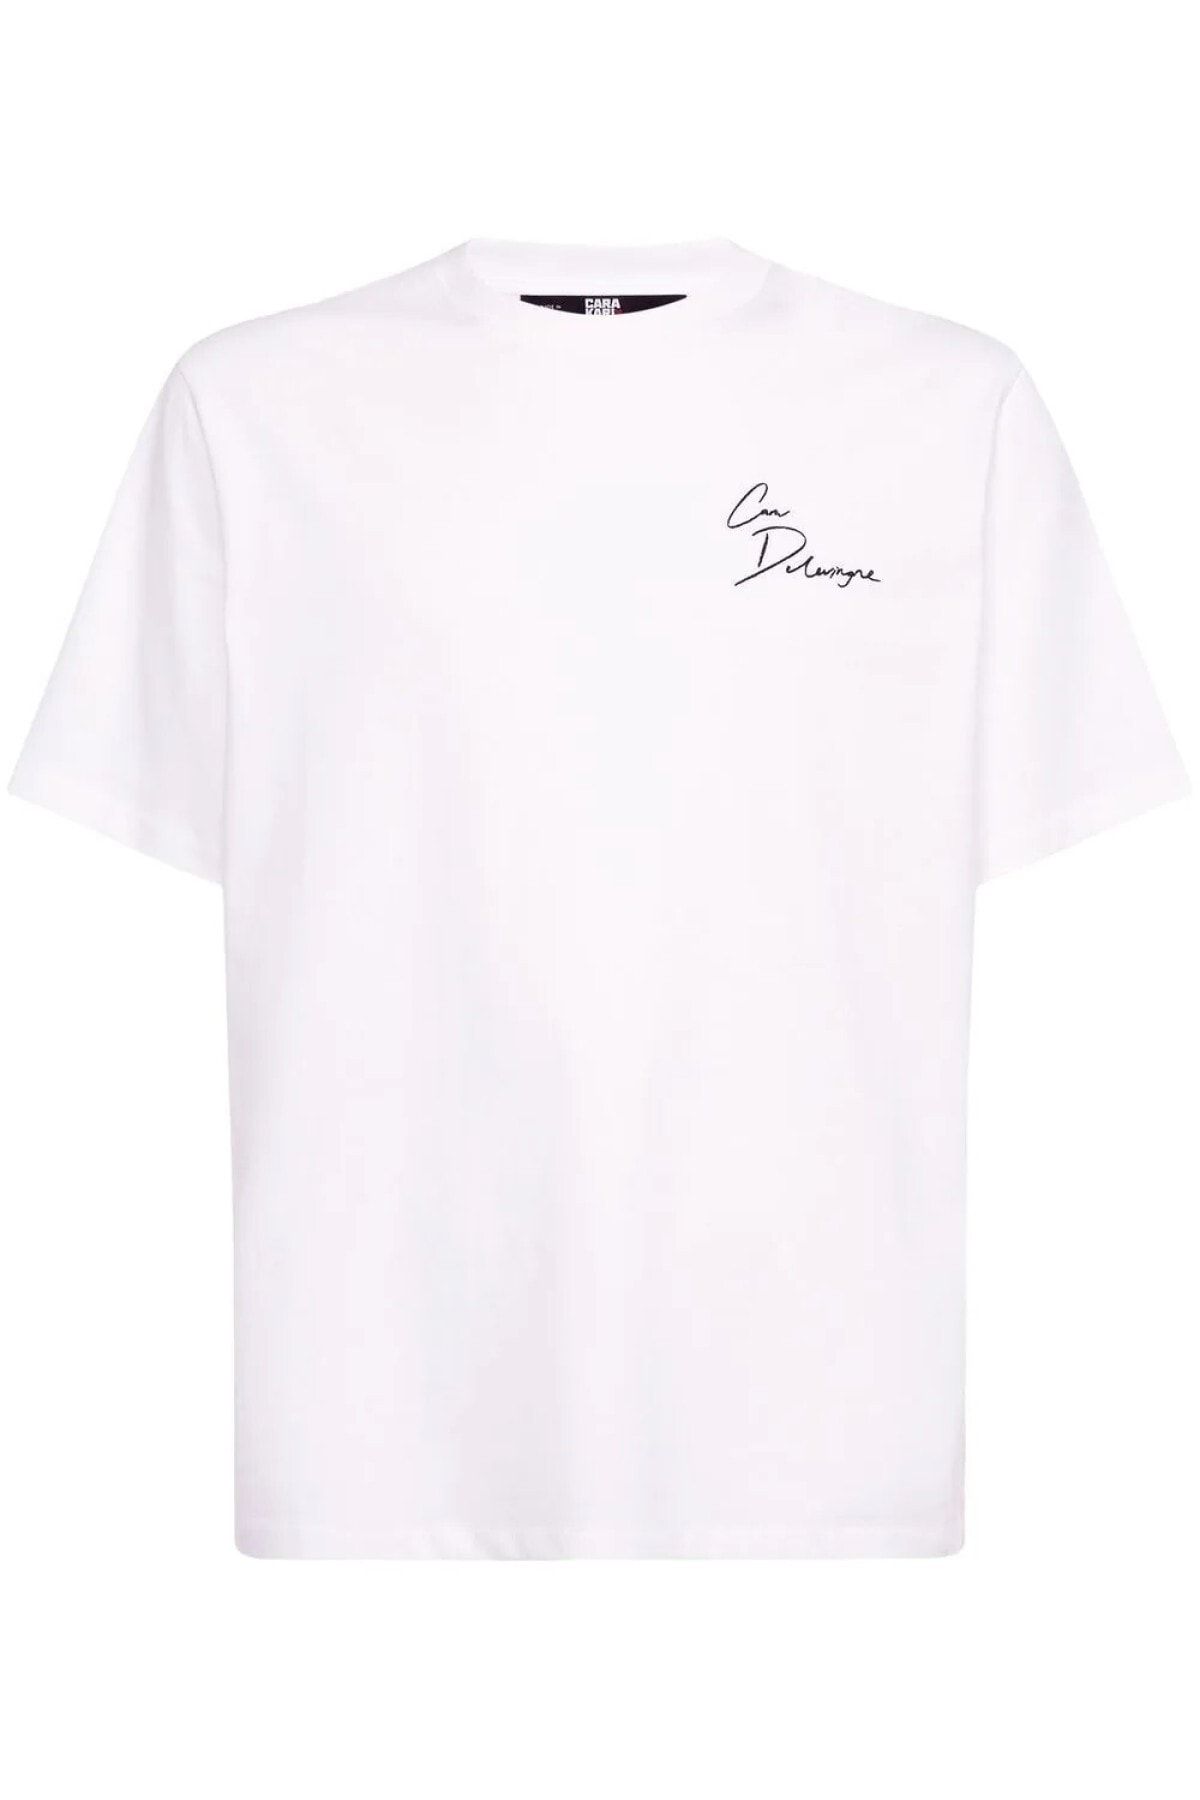 Karl Lagerfeld X Cara Delevingne Signature T-shirt